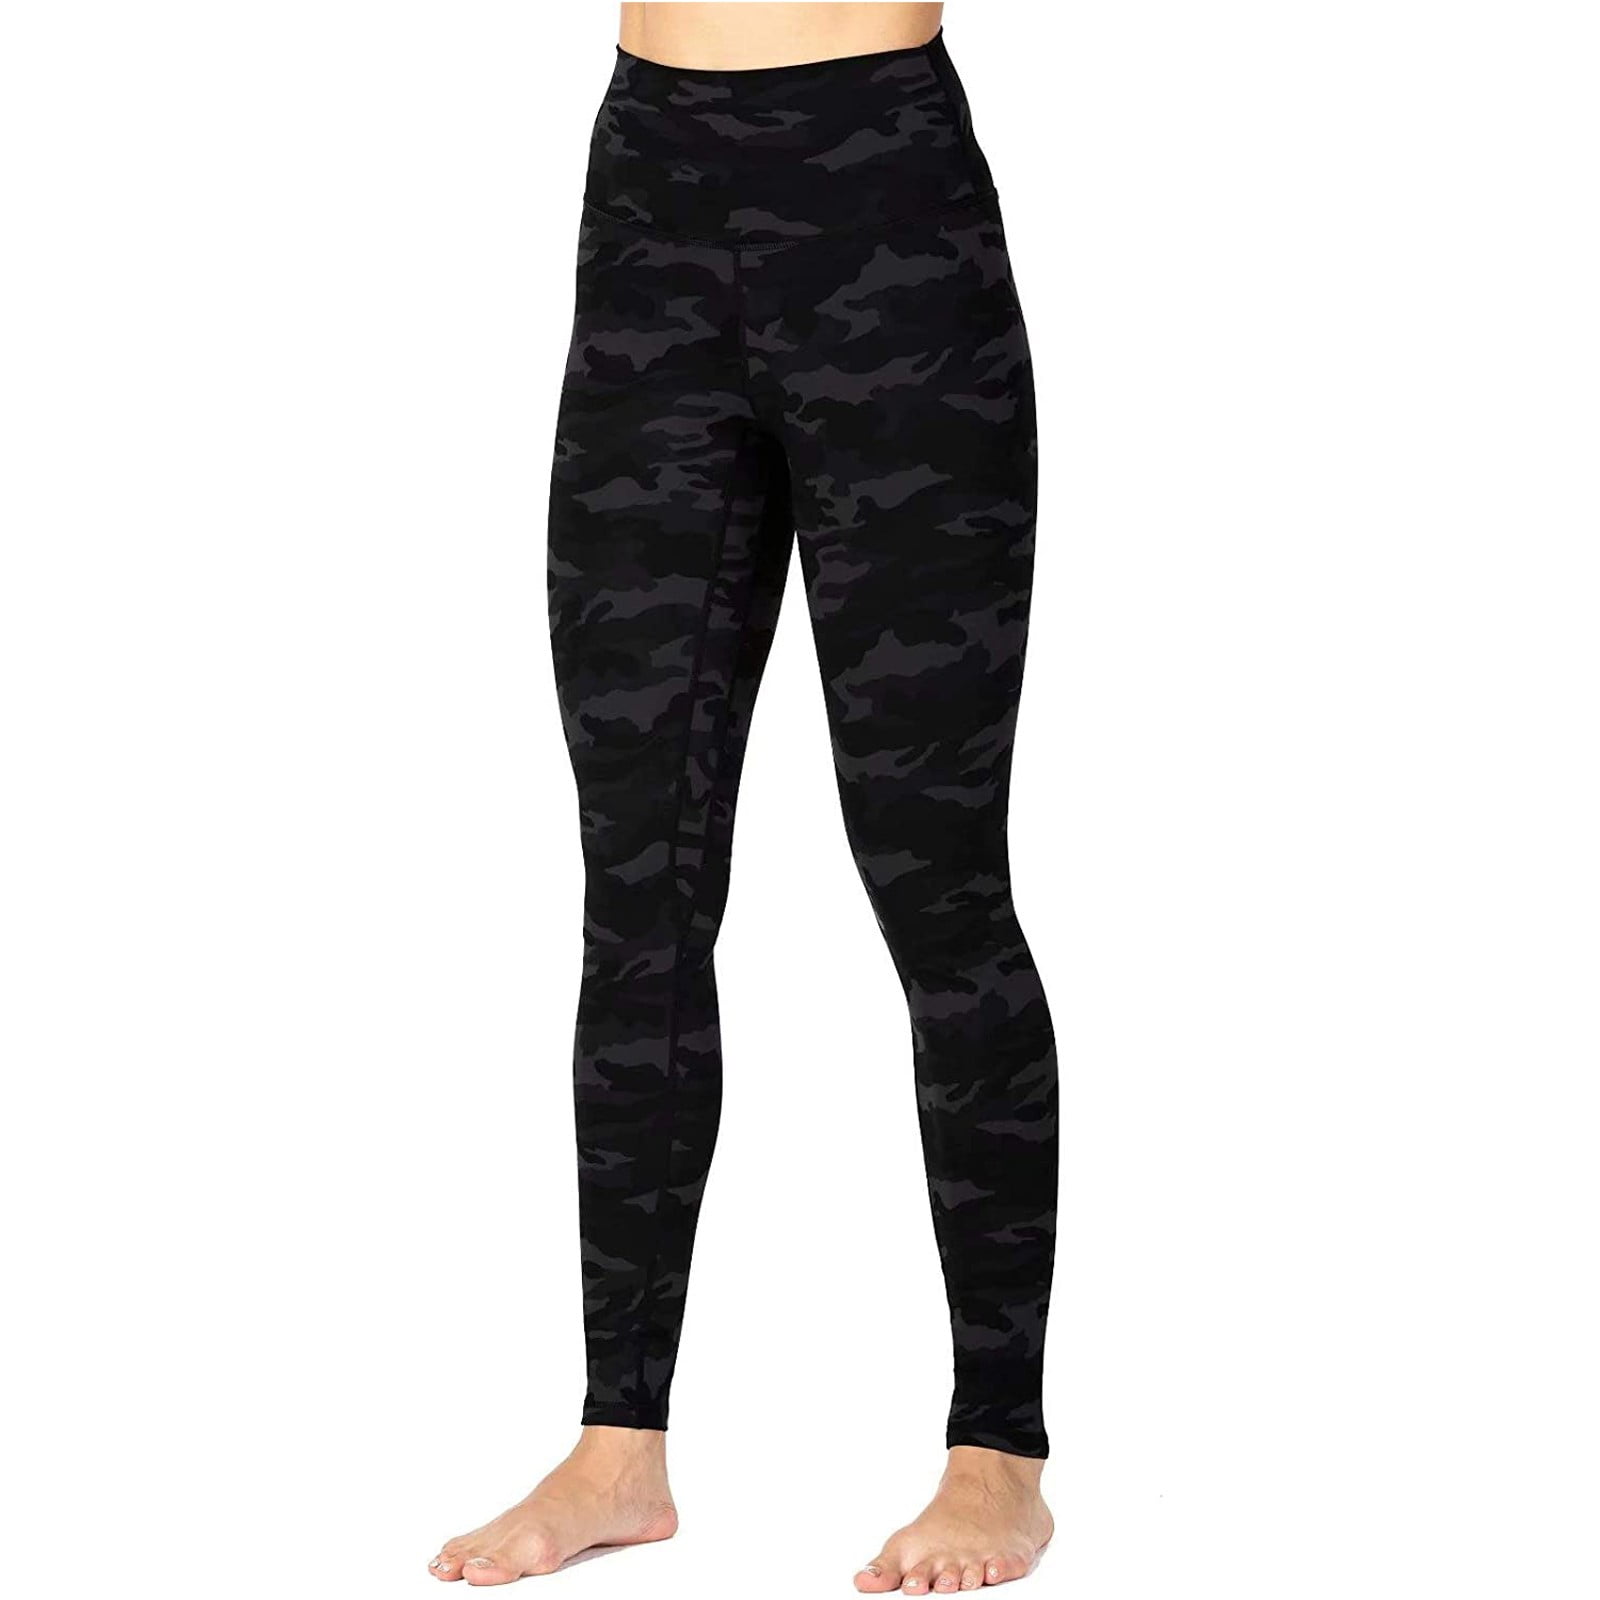 Women's Leggings Soft Yoga Pants Gym Fitness No Front Seam Butt Lift Shaper Slim 